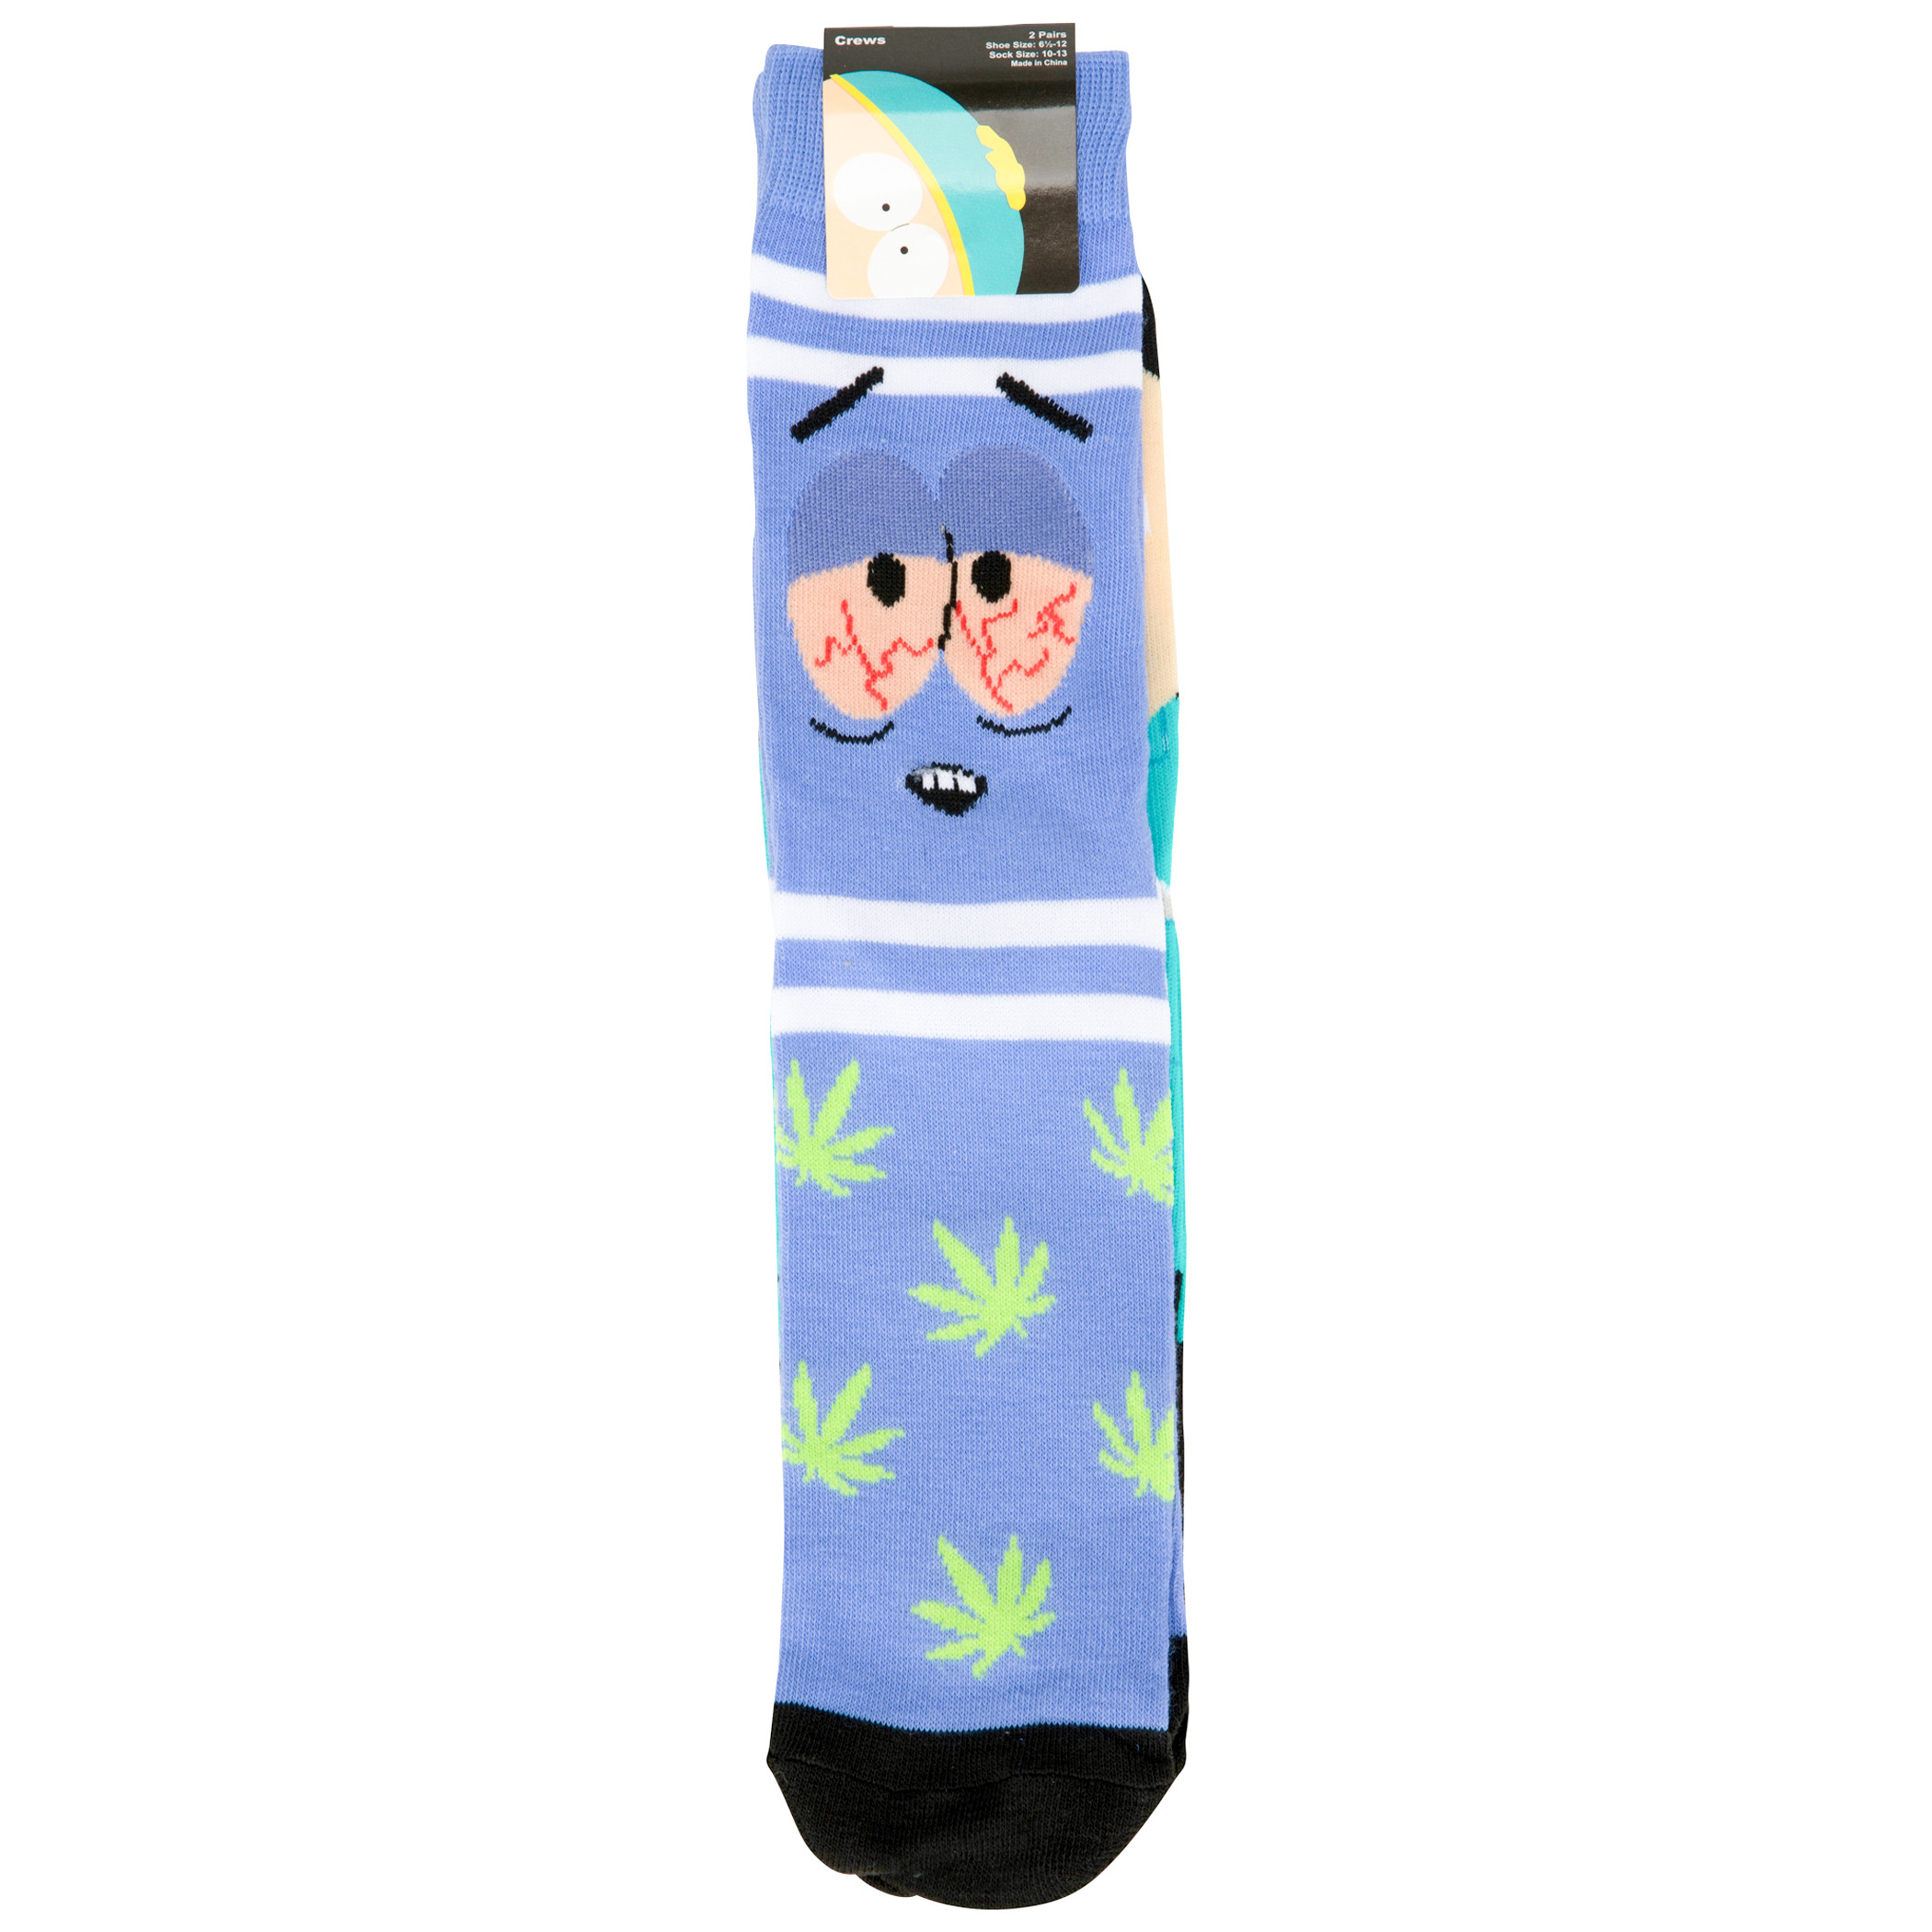 South Park Towelie and Randy Men's Crew Socks 2-Pack